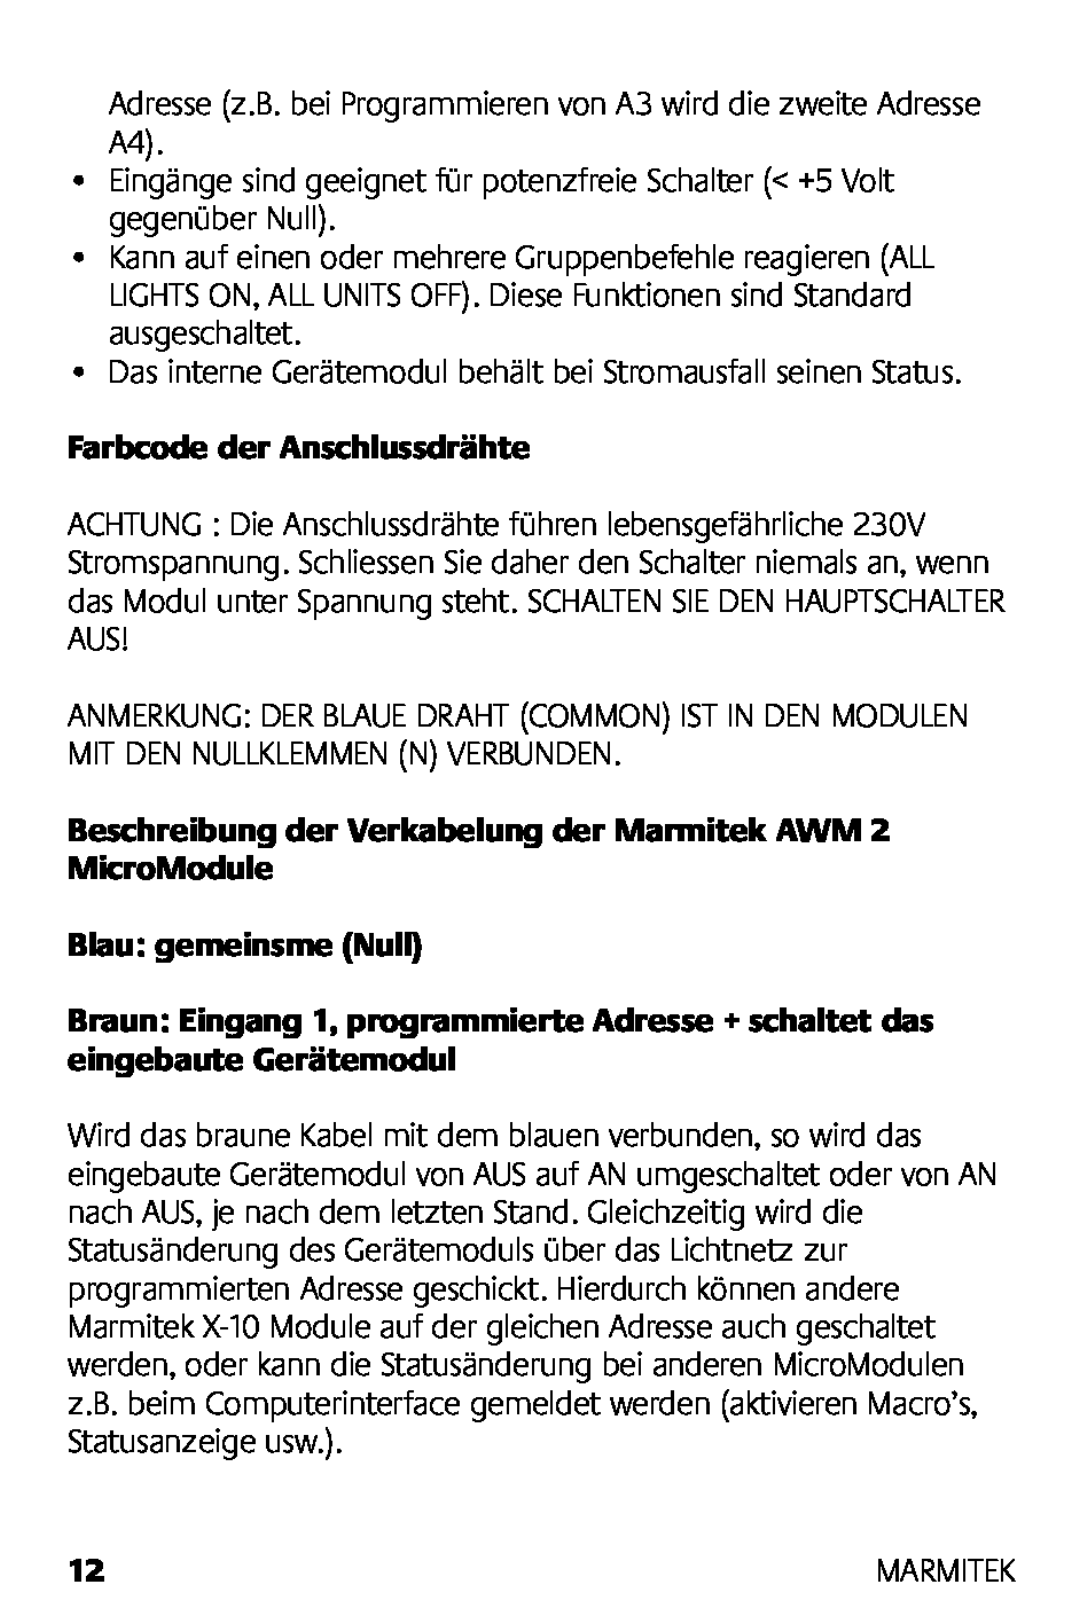 Marmitek AWM2 manual Farbcode der Anschlussdrähte, Blau gemeinsme Null 